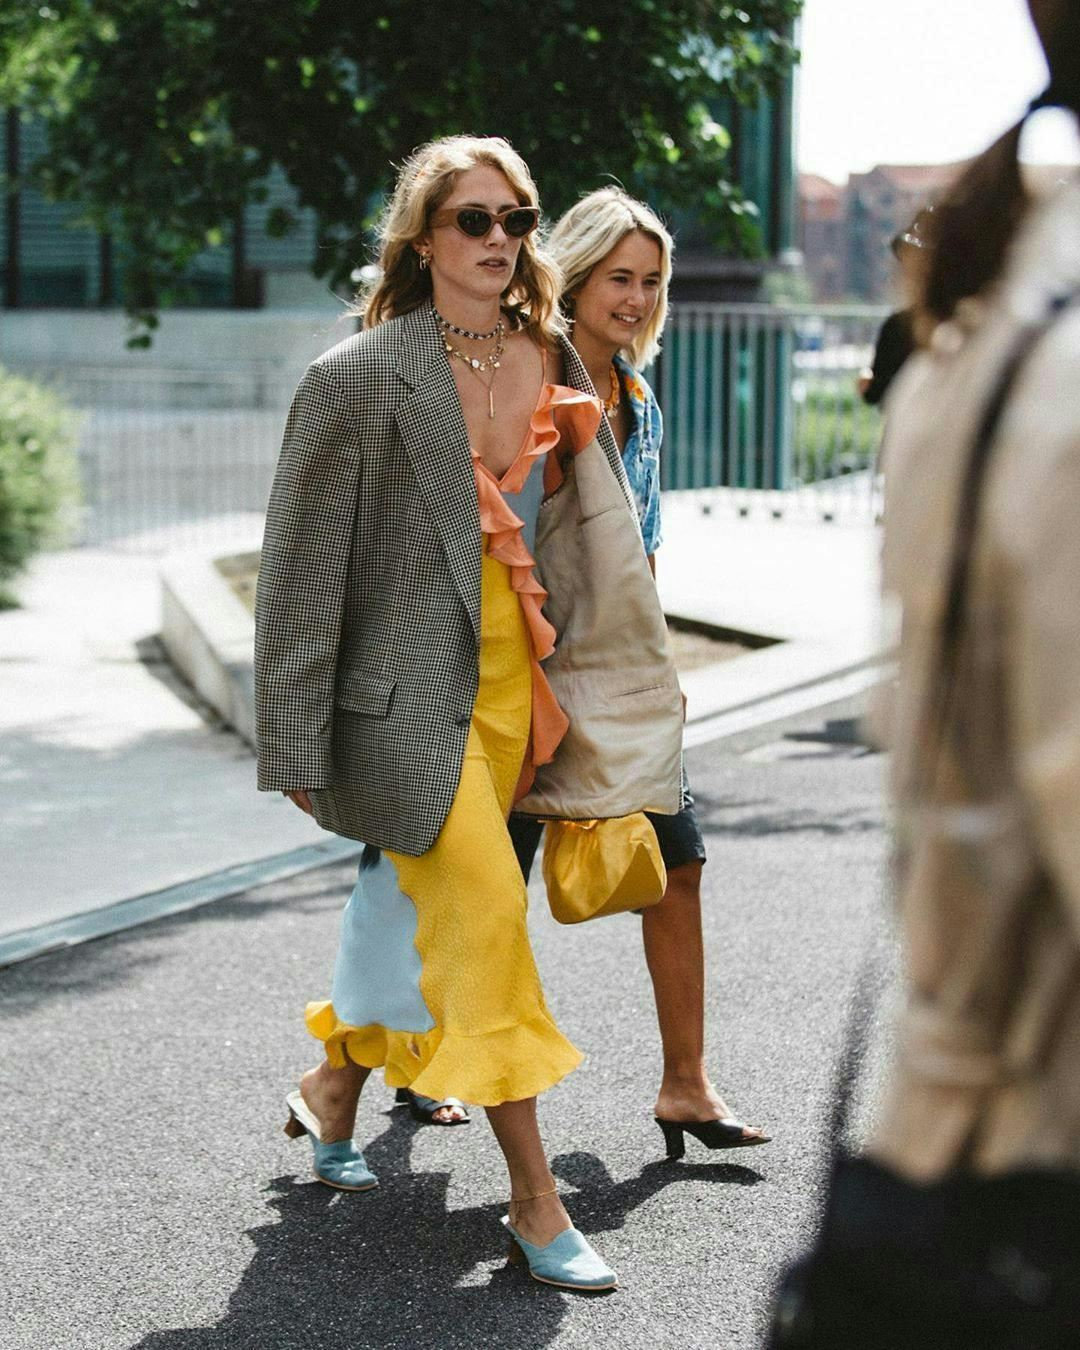 apparel clothing person sunglasses accessories road pedestrian shorts tarmac footwear